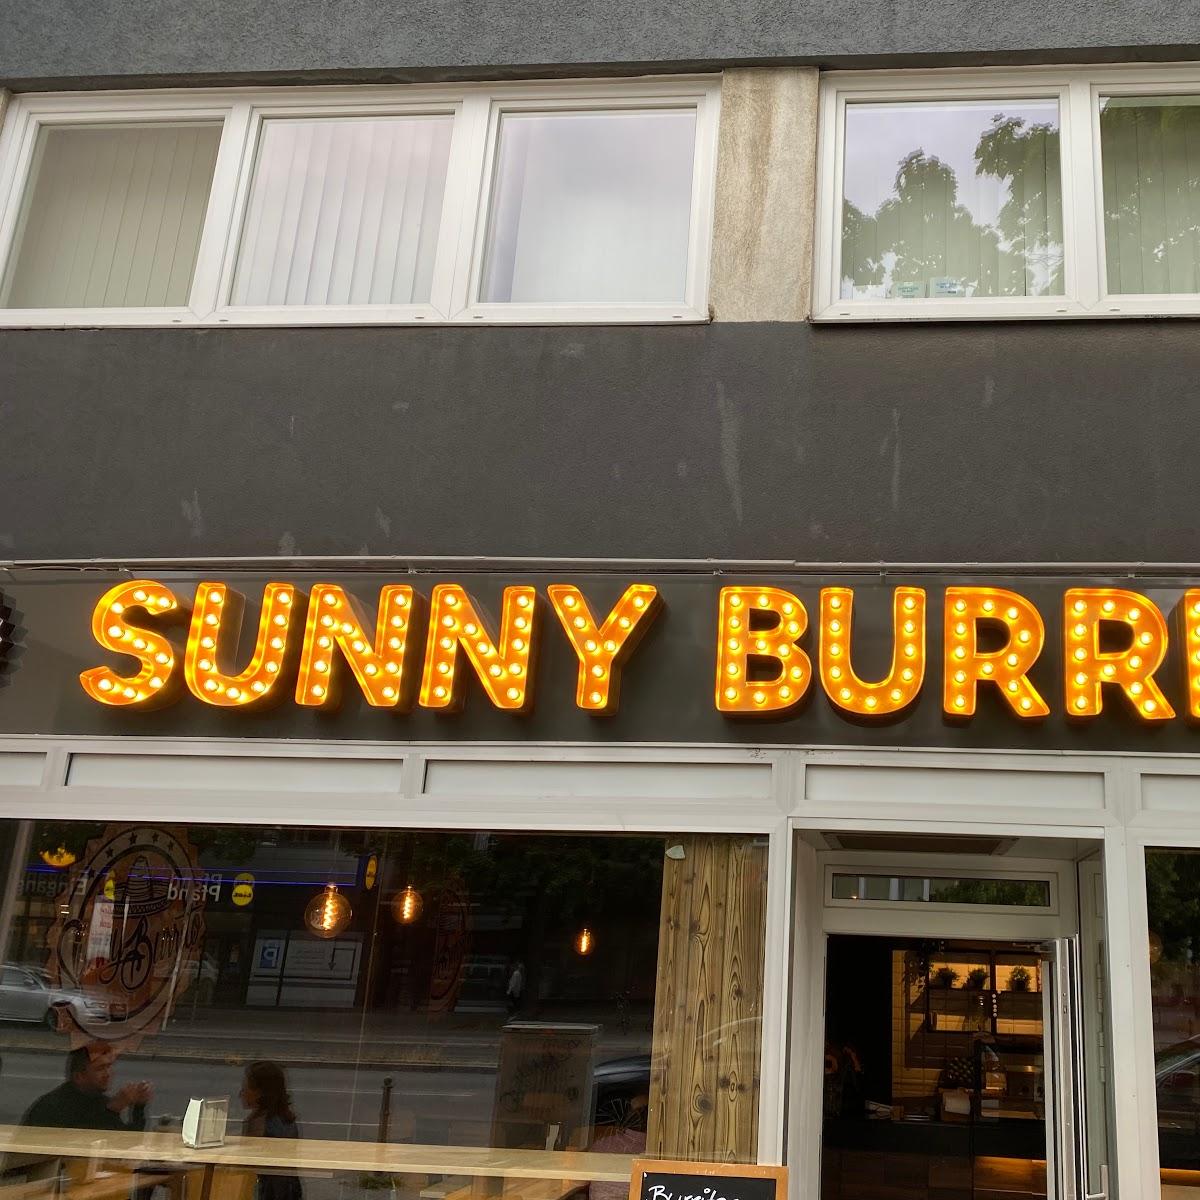 Restaurant "Sunny Burrito" in Berlin